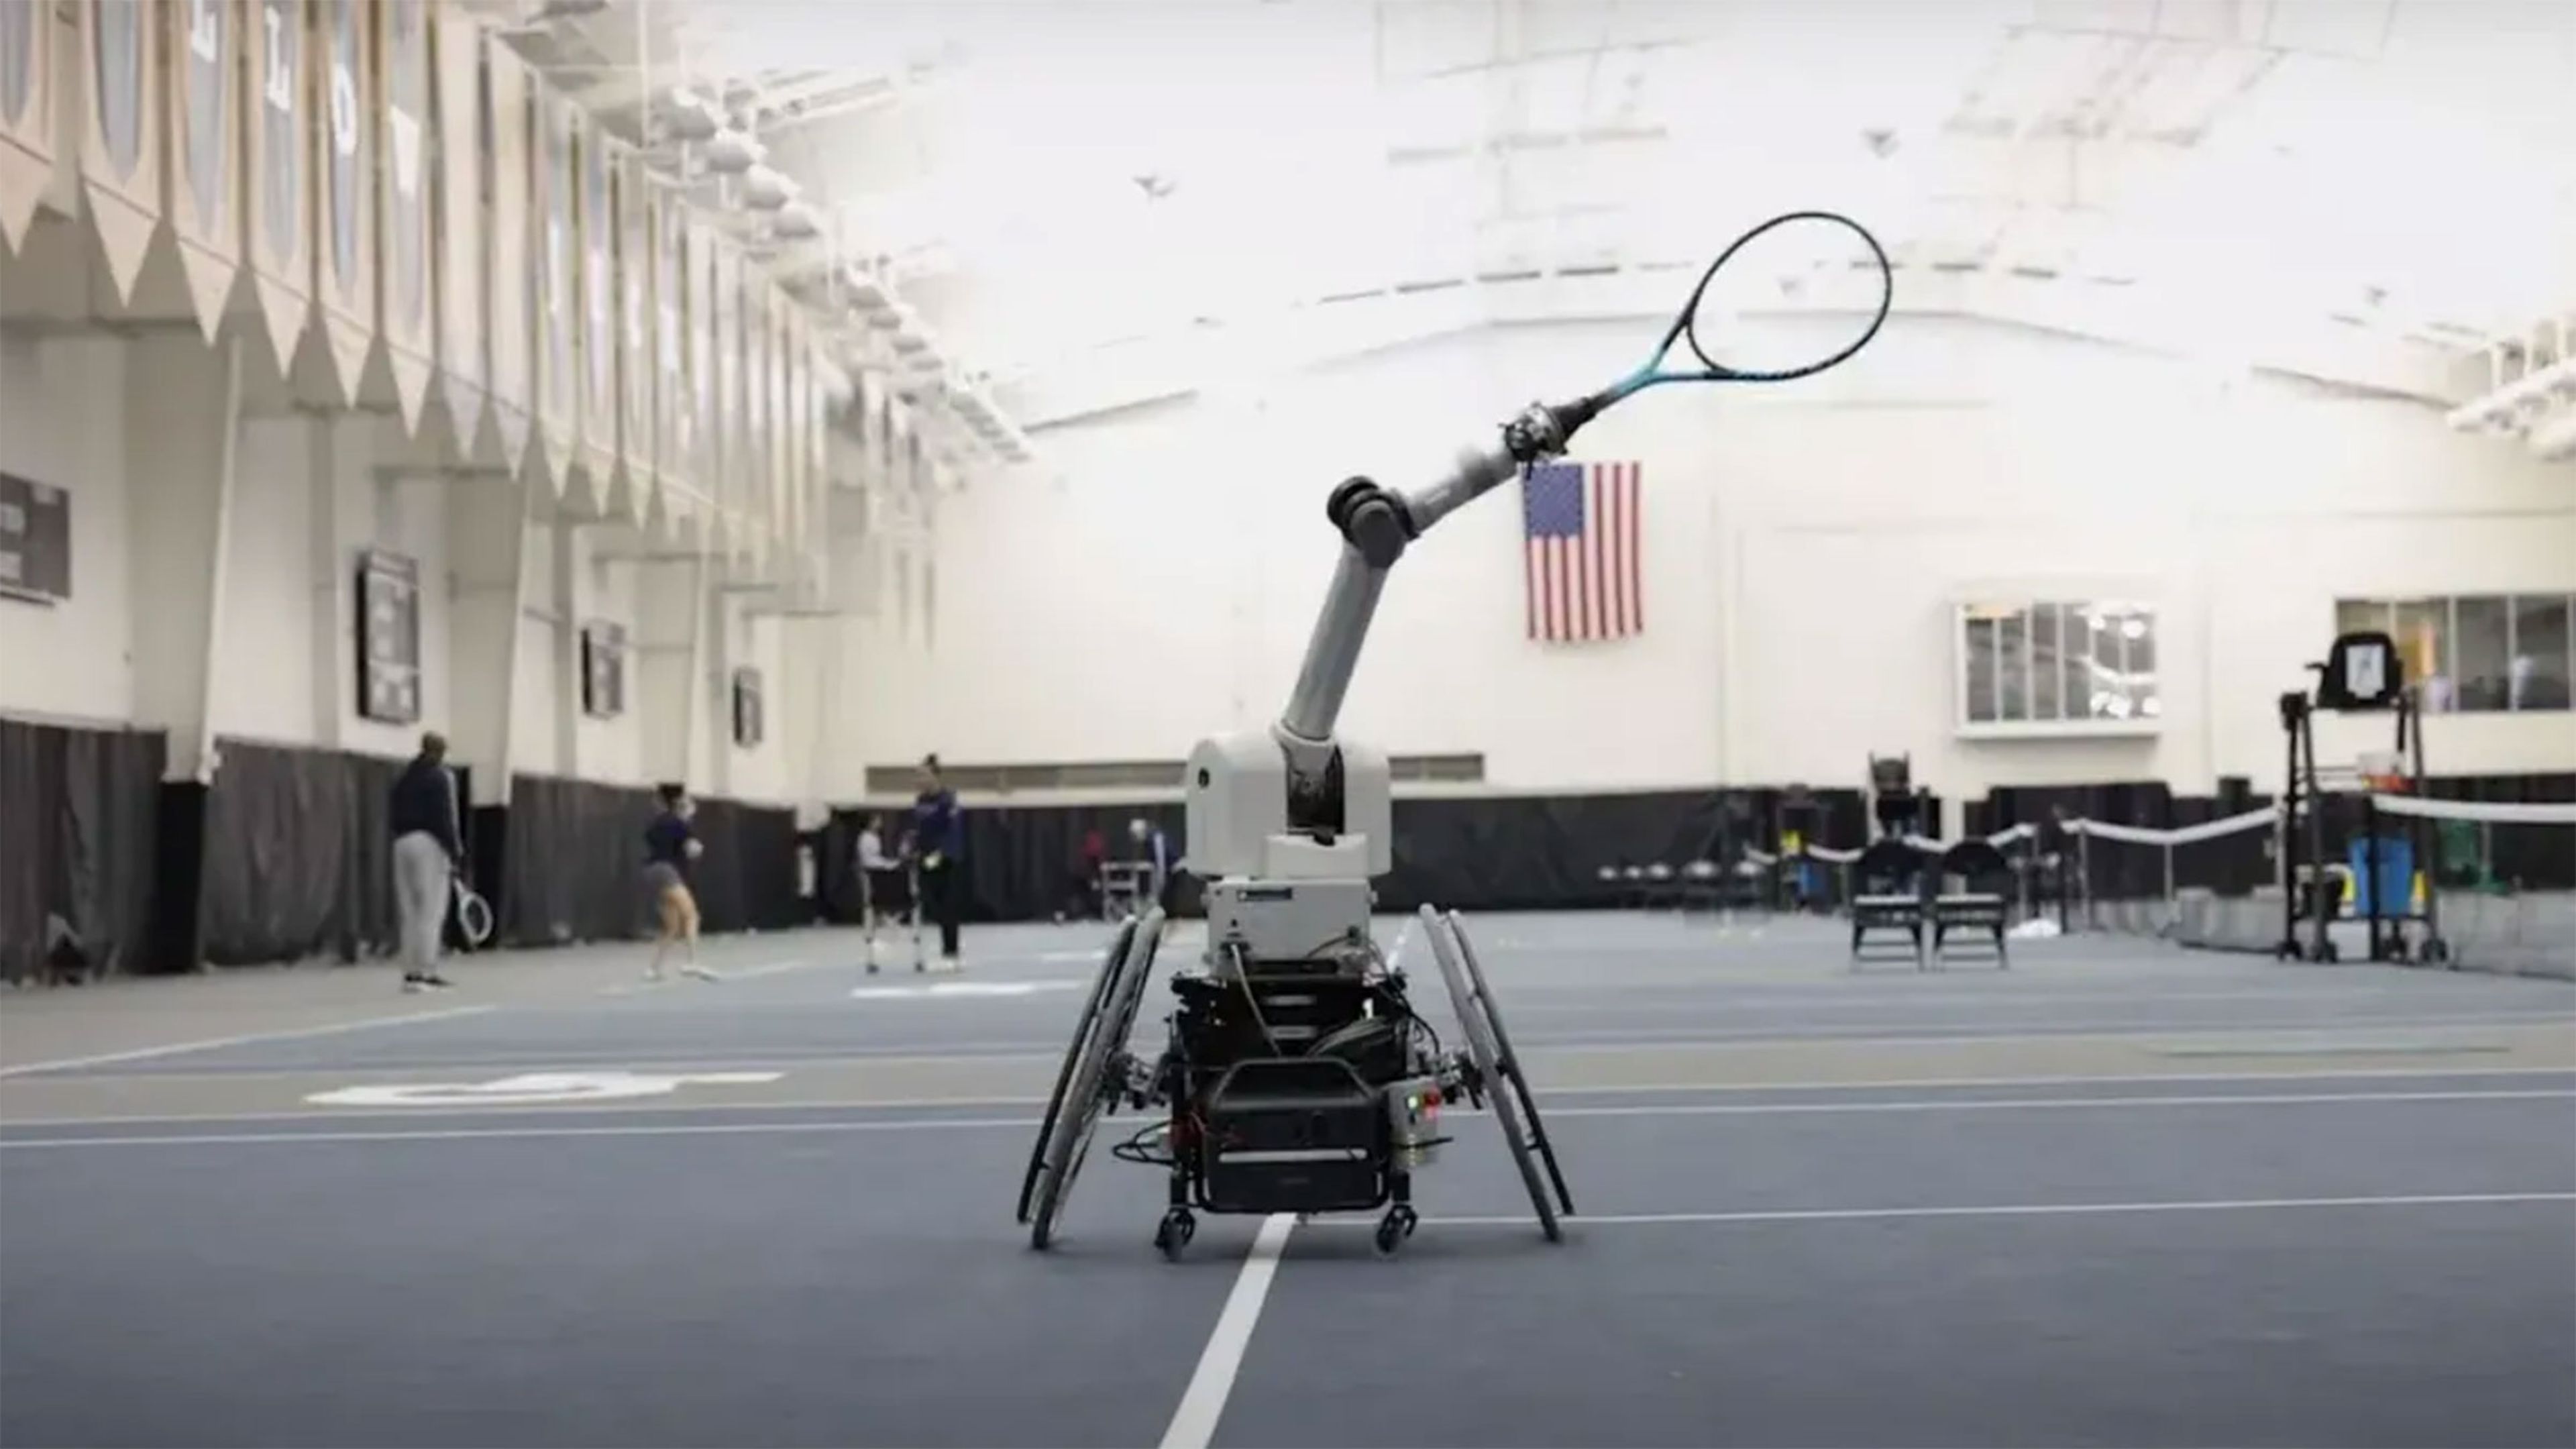 Crean un robot de tenis autónomo para ayudarte a convertirte en mejor jugador